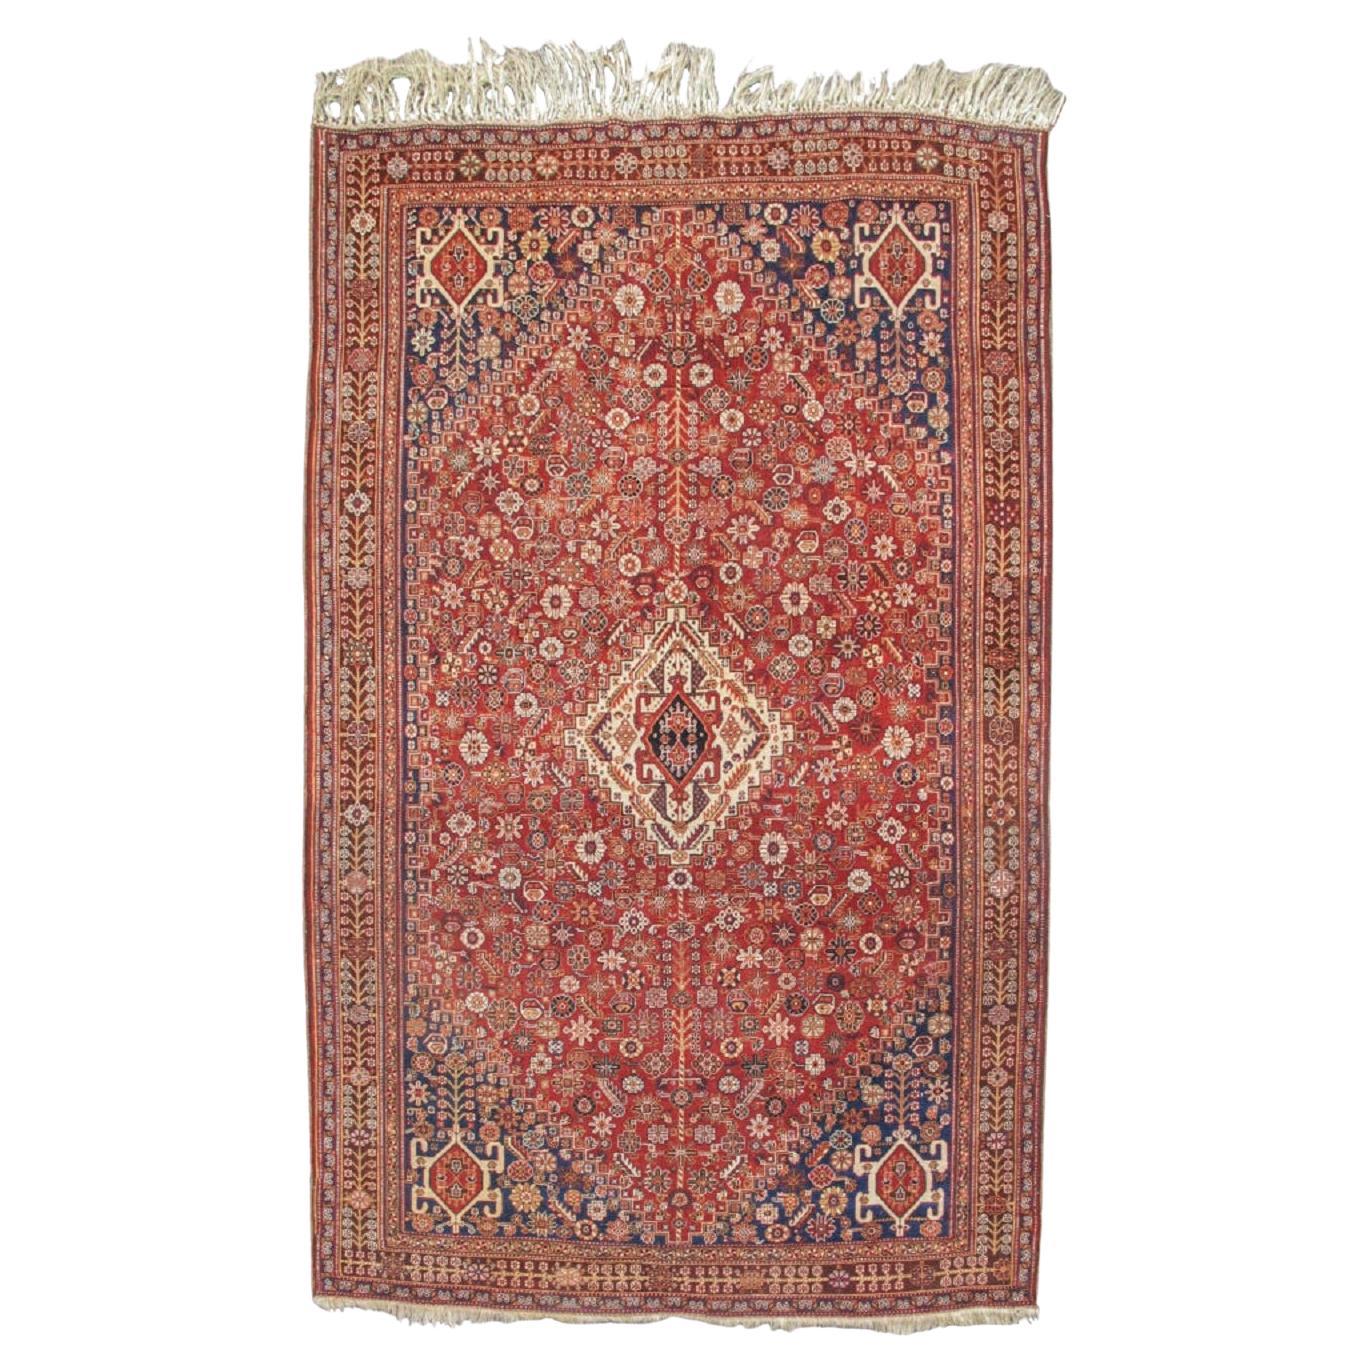 Antiker persischer Gaschgai-Teppich, um 1900